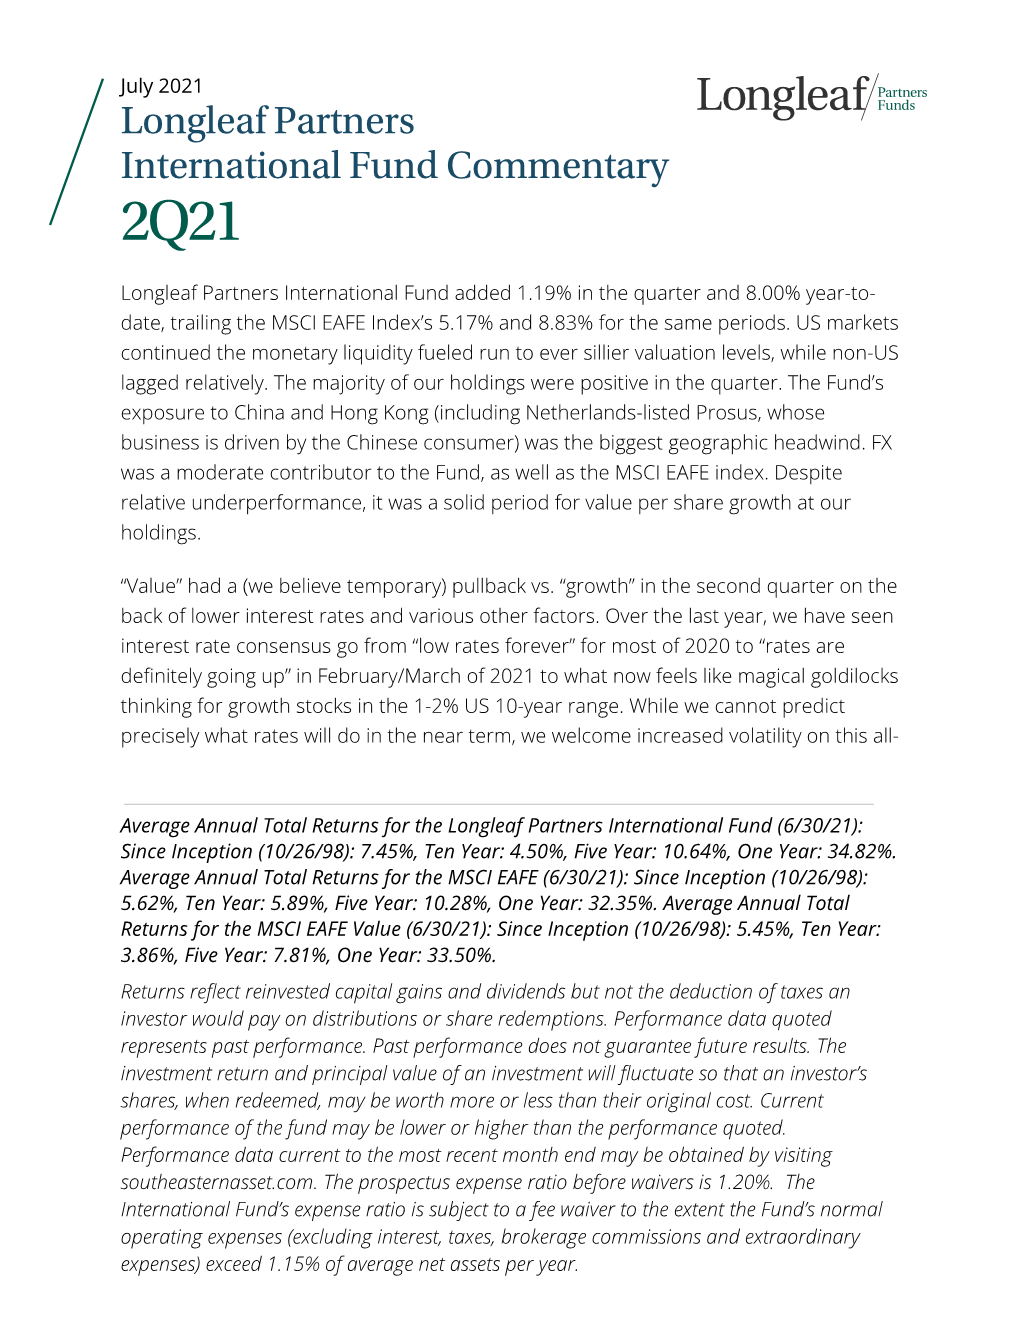 Longleaf Partners International Fund Commentary 2Q21